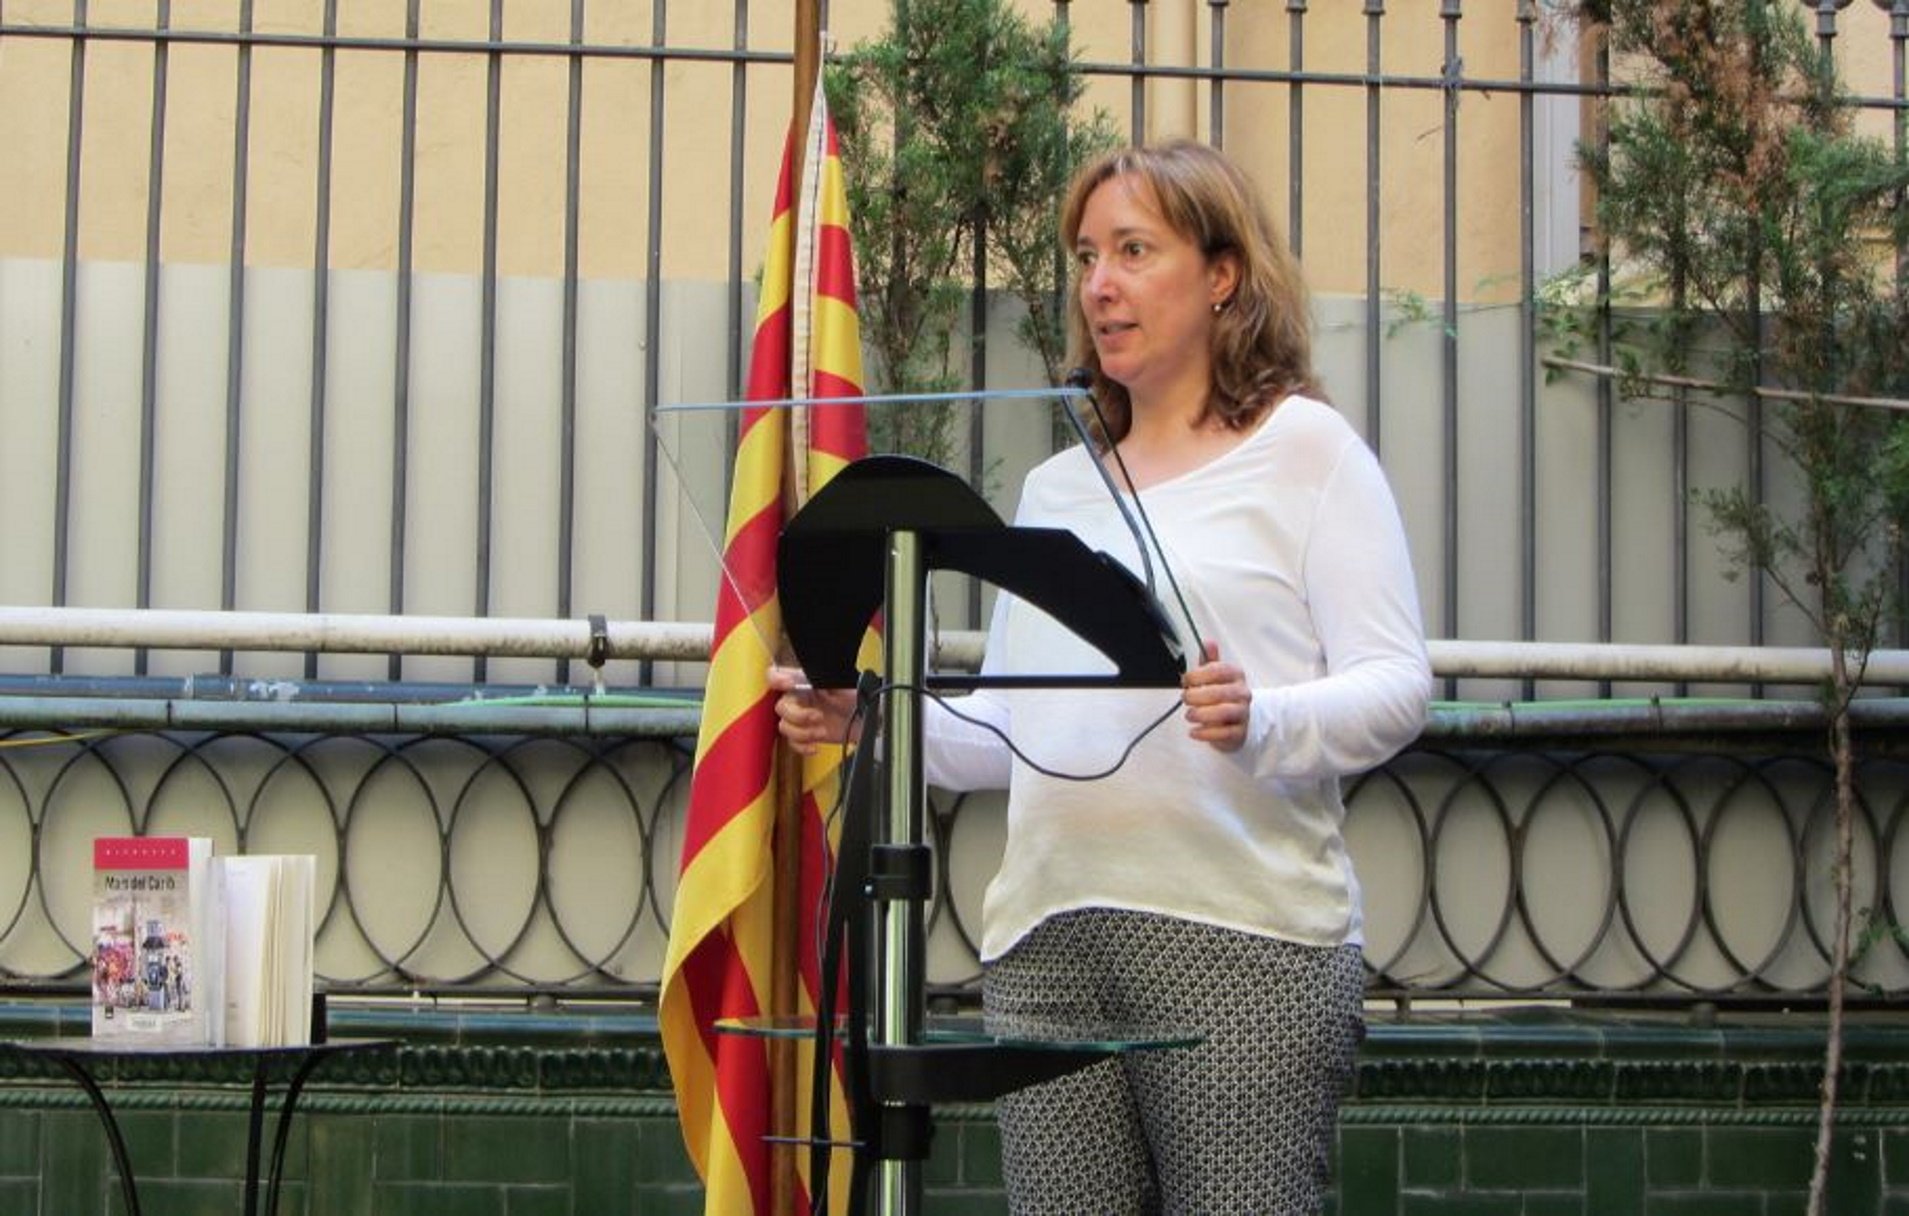 Polémica en el Ateneu Barcelonès por el despido fulminante de Diana Cot, coordinadora cultural